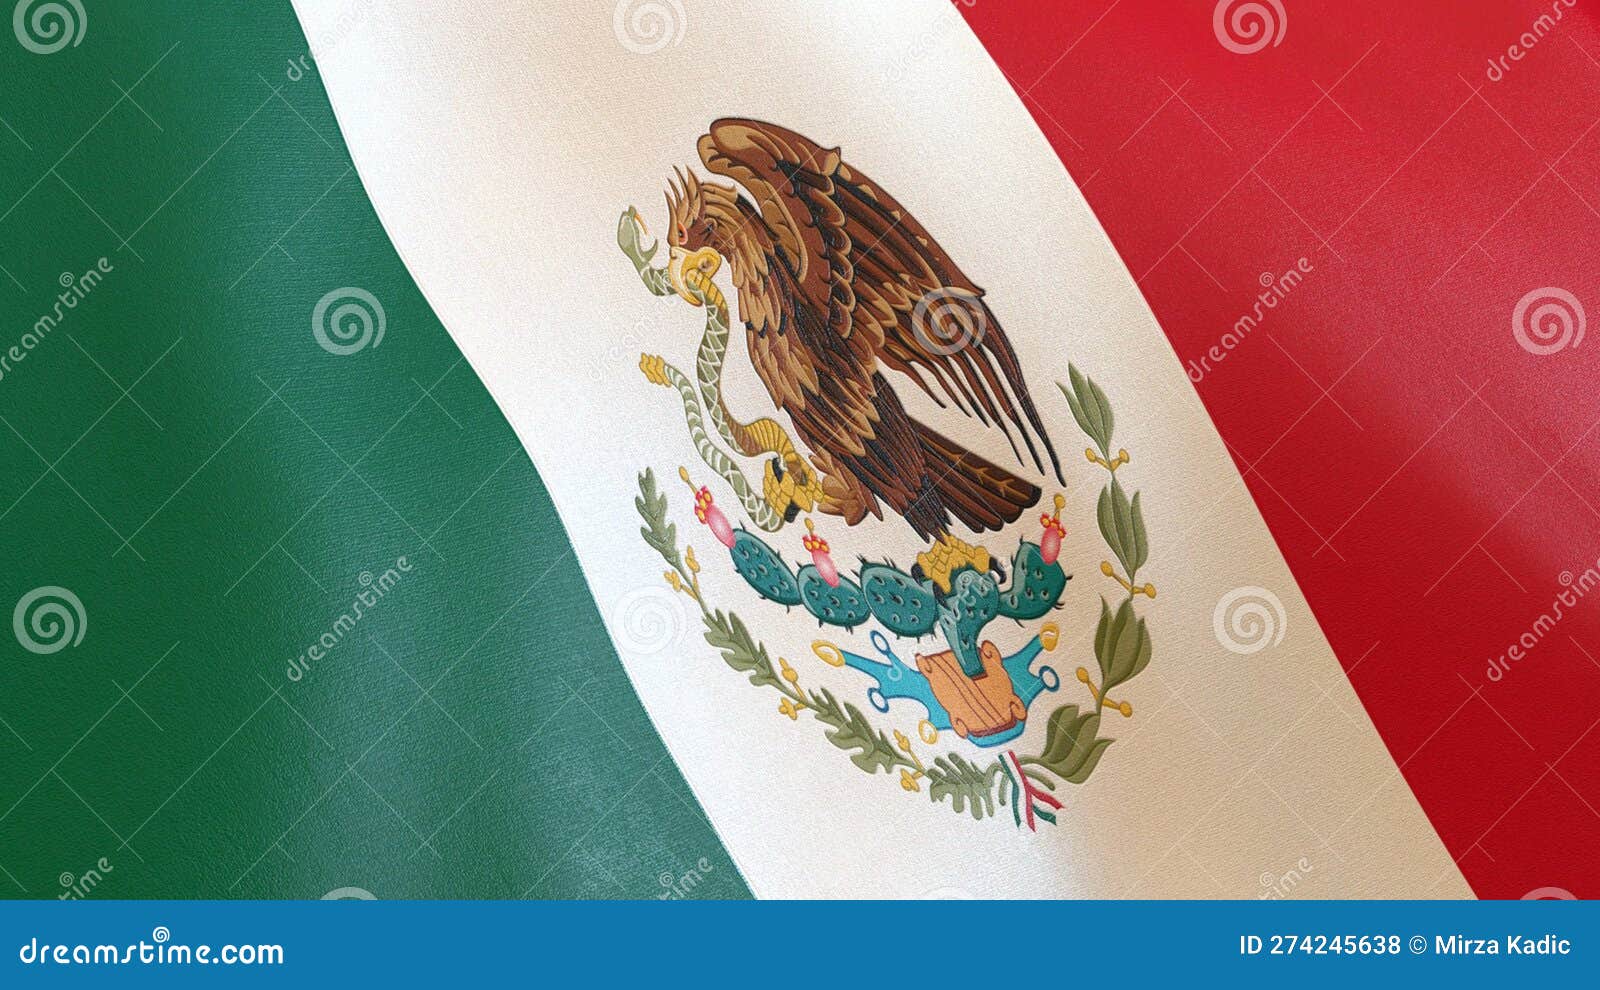 mexico flag mexican flag close up side angle 3d render, bandera de mexico